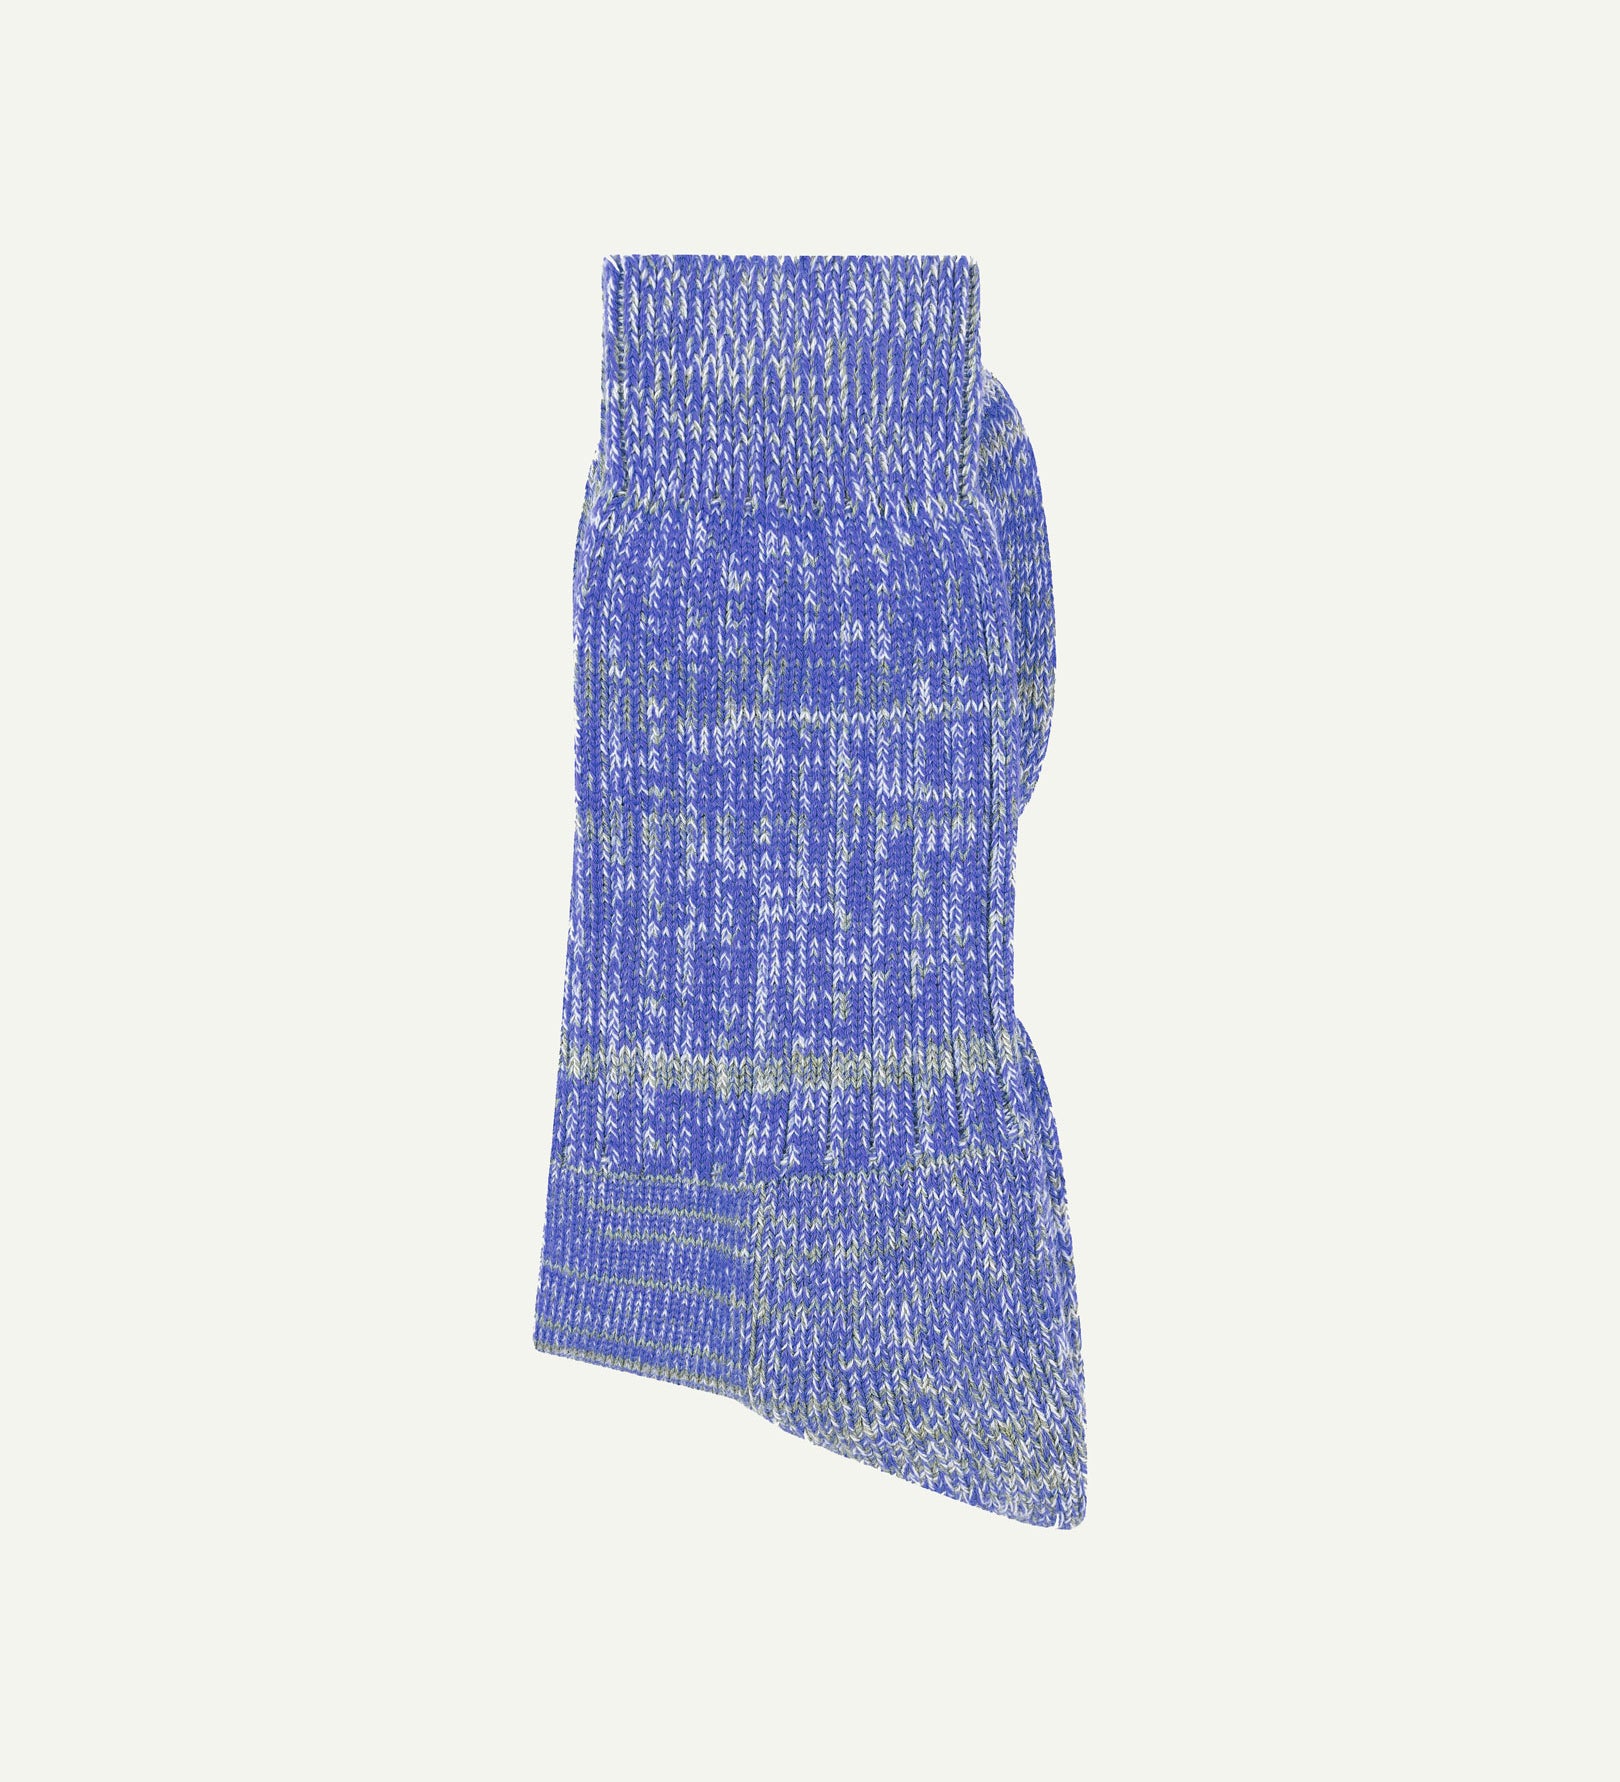 Folded shot of Uskees 4006 organic cotton socks in ultra blue, showing random parallel knitting pattern.